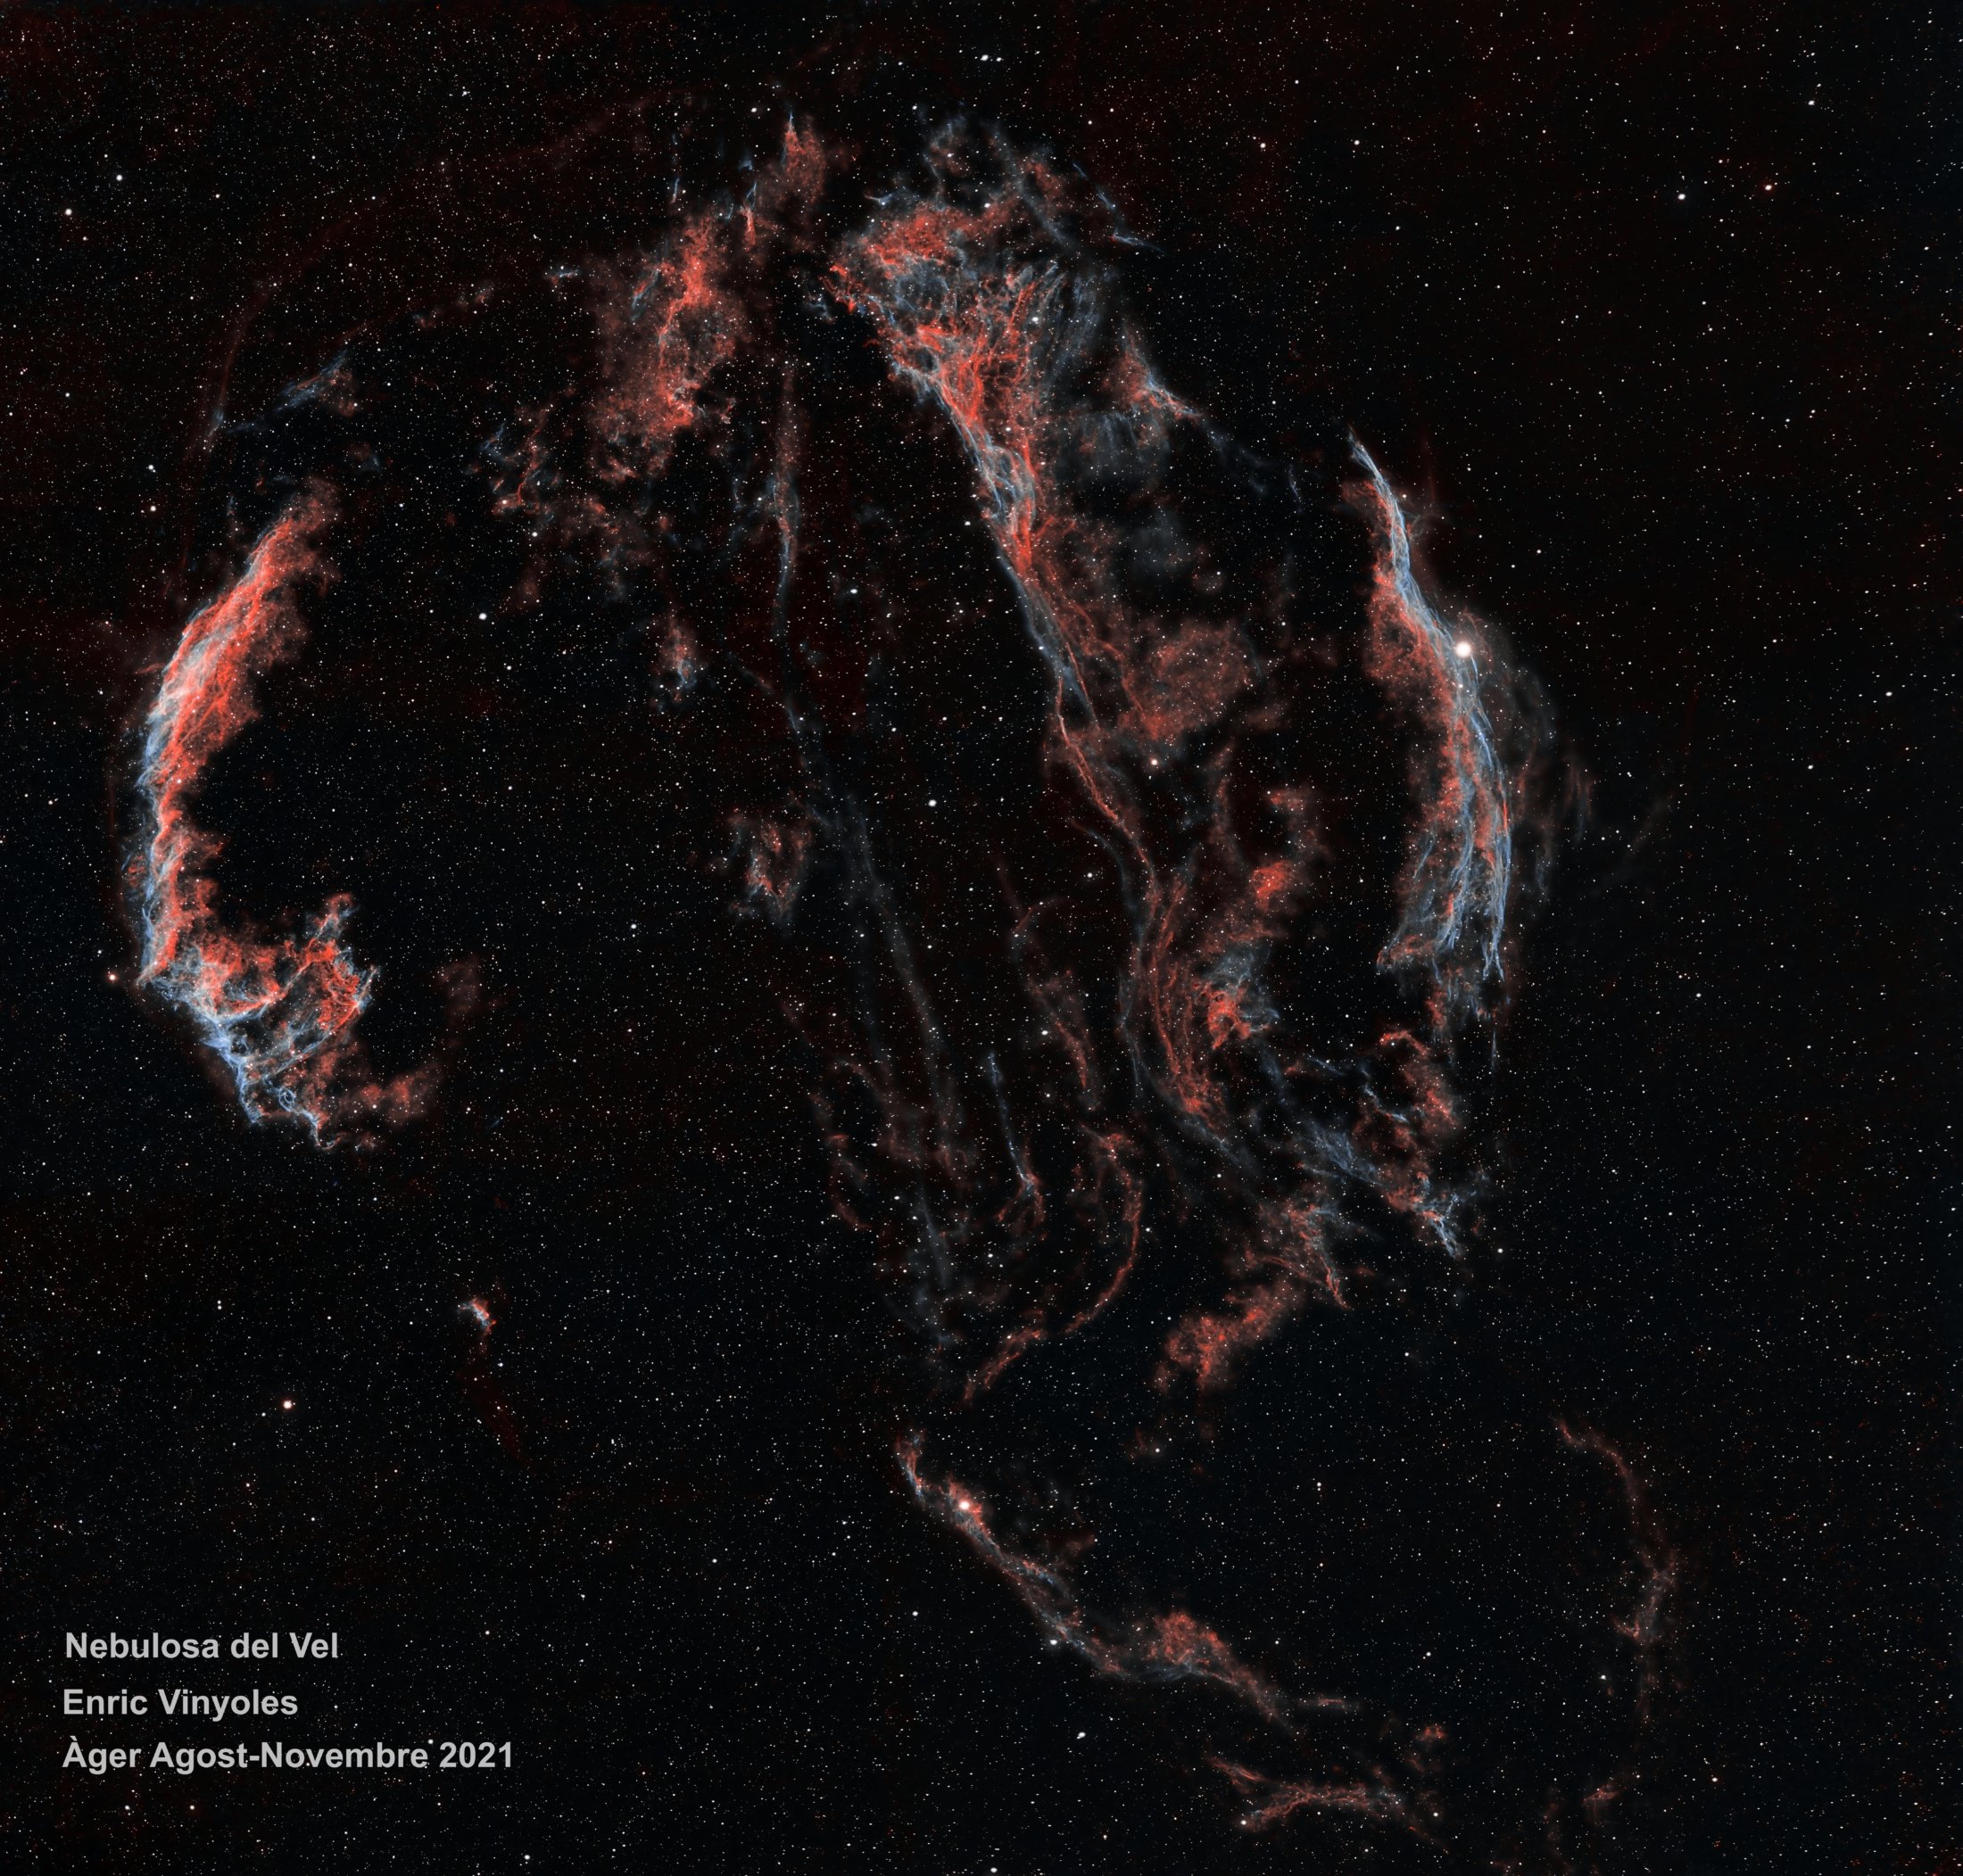 Nebulosa del Vel - Enric Vinyoles